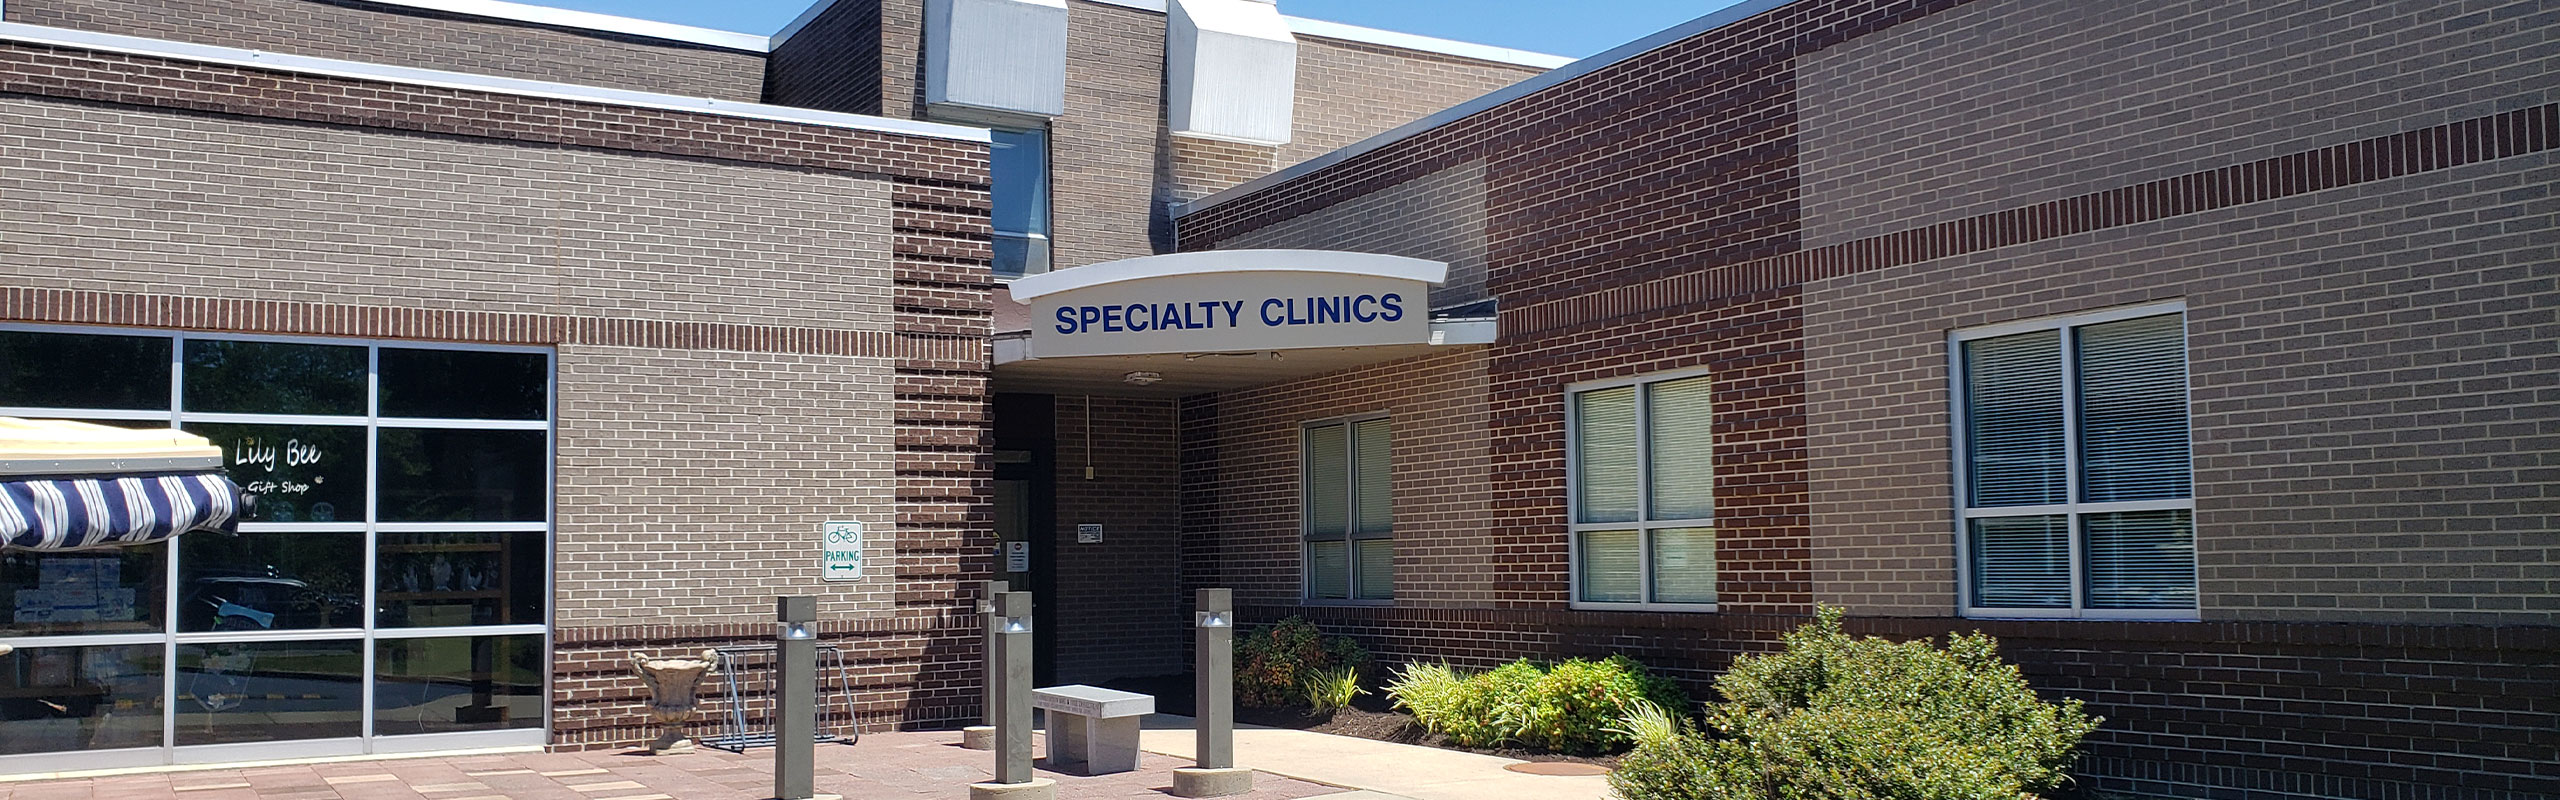 SPECIALTY CLINICS - Marshall Browning Hospital